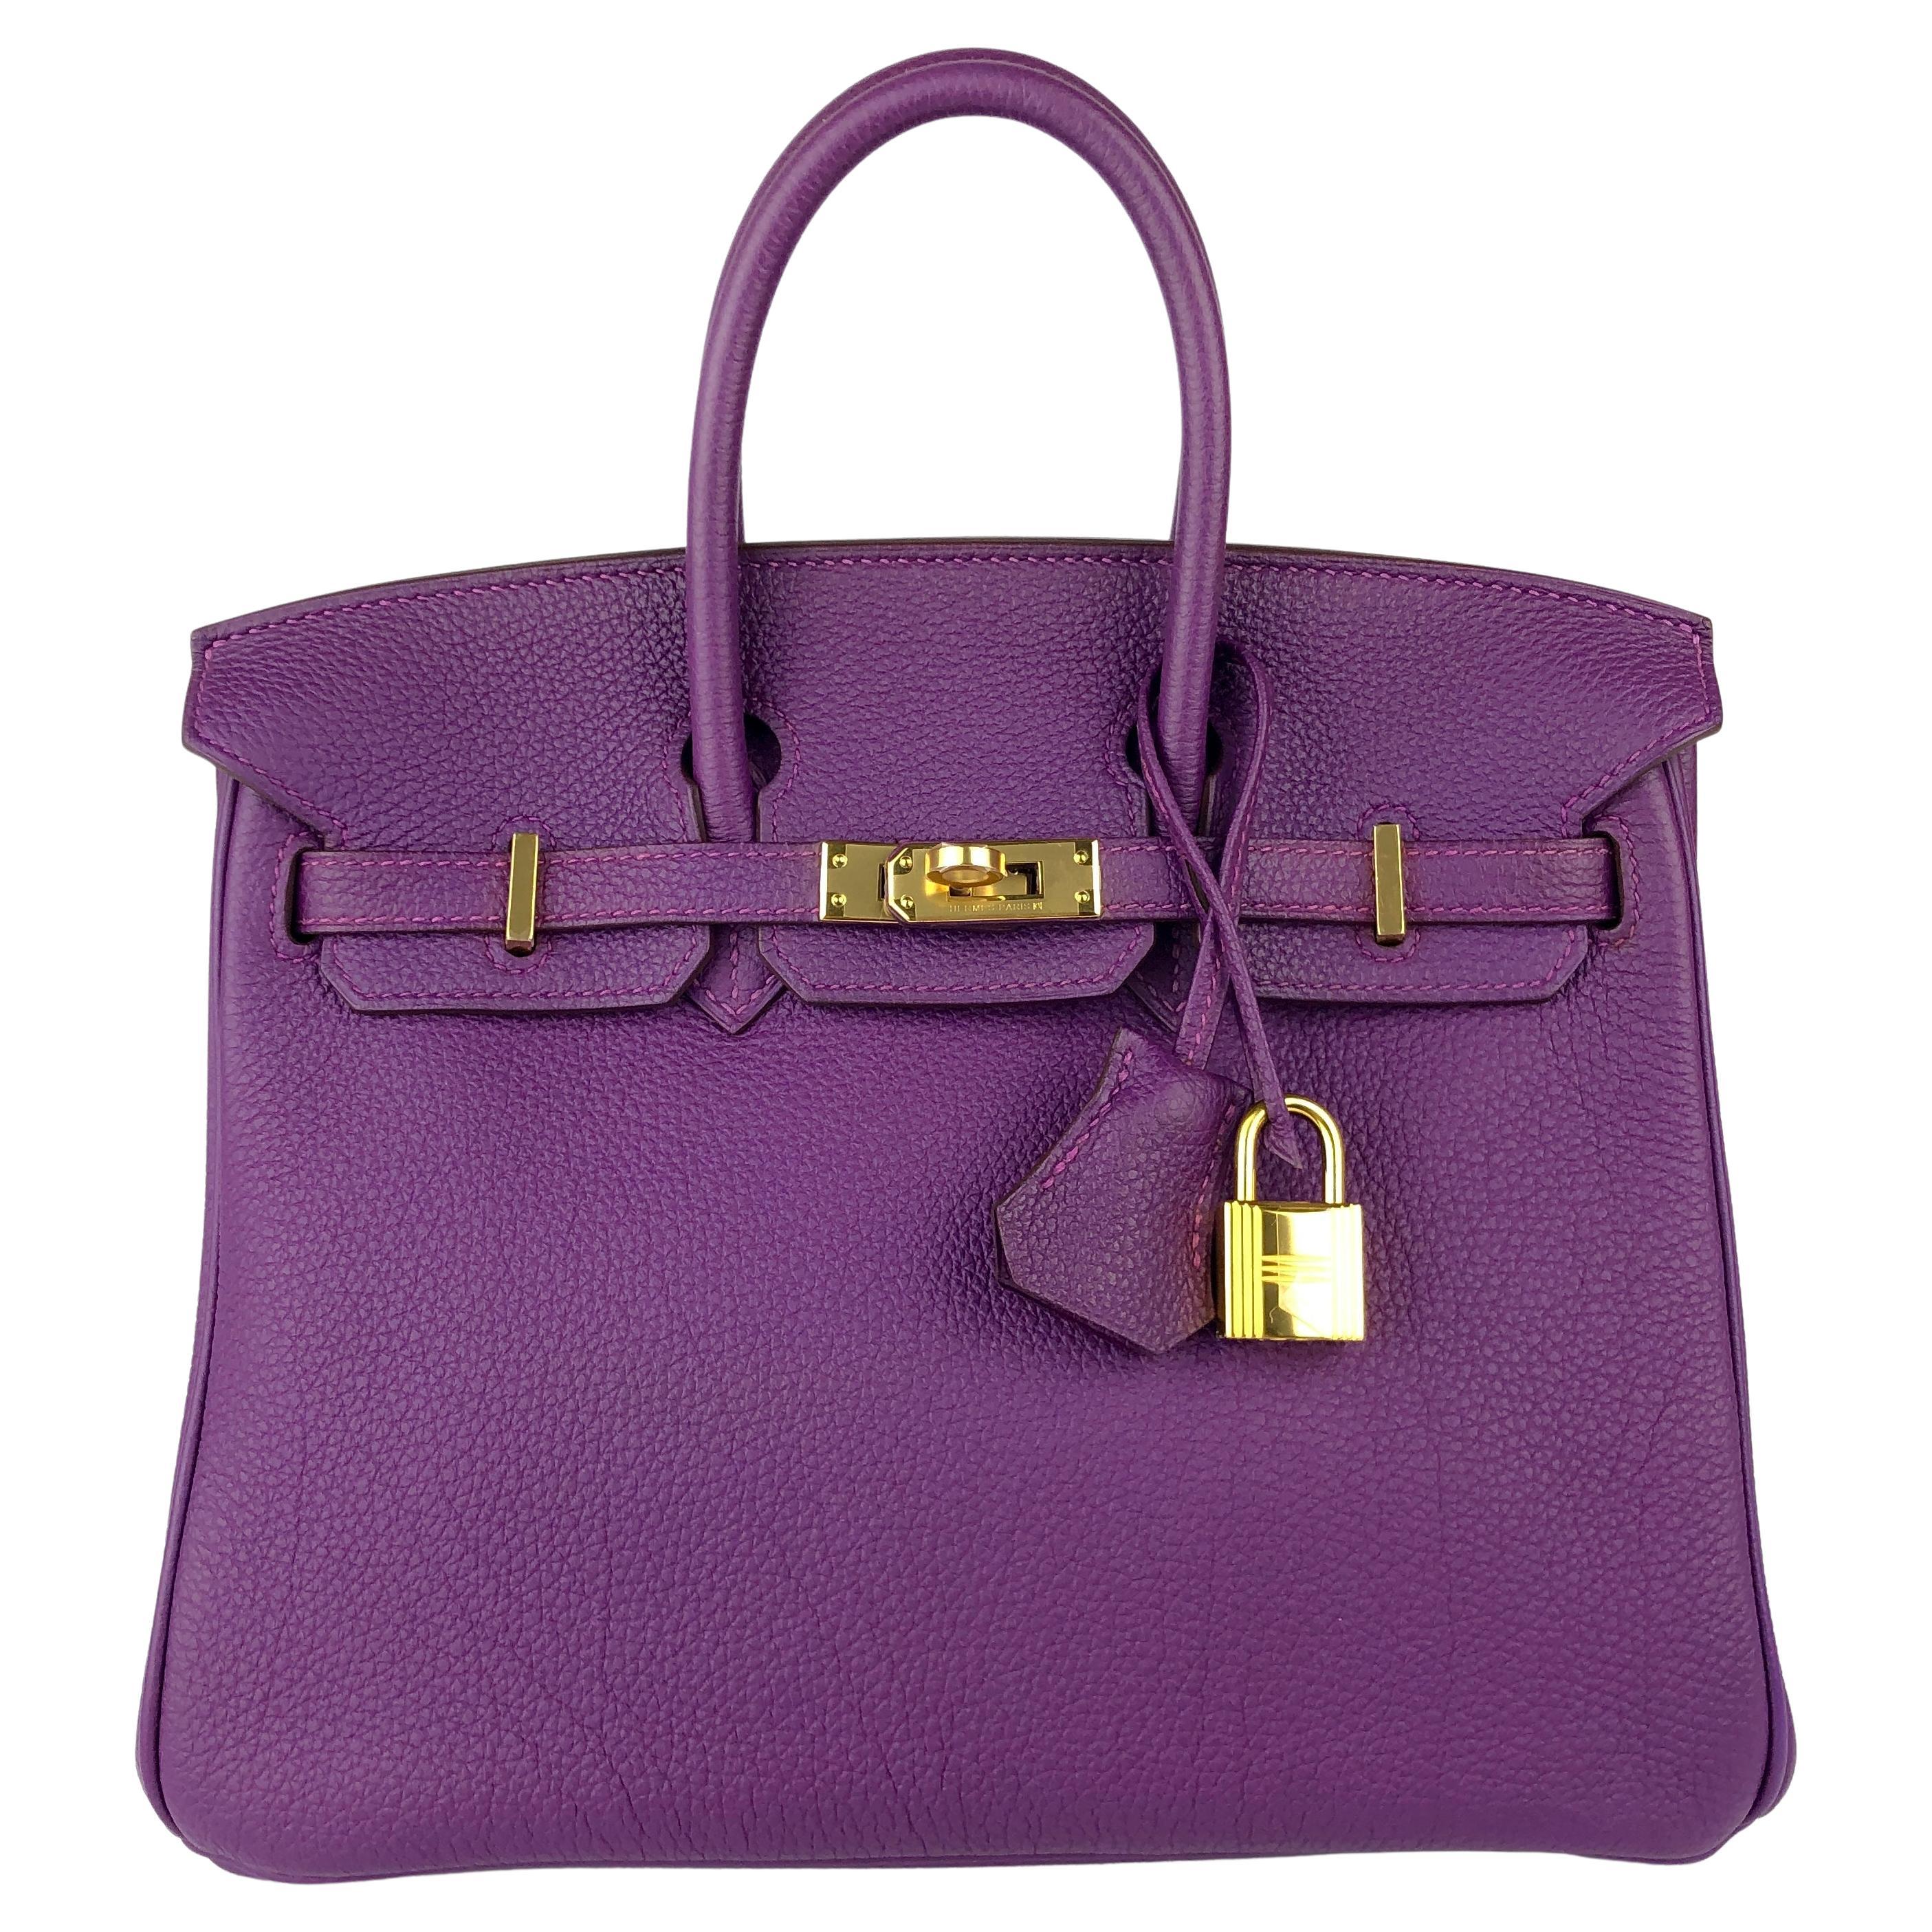 Hermes Birkin 25 Anemone Purple Togo Leather Handbag Gold Hardware